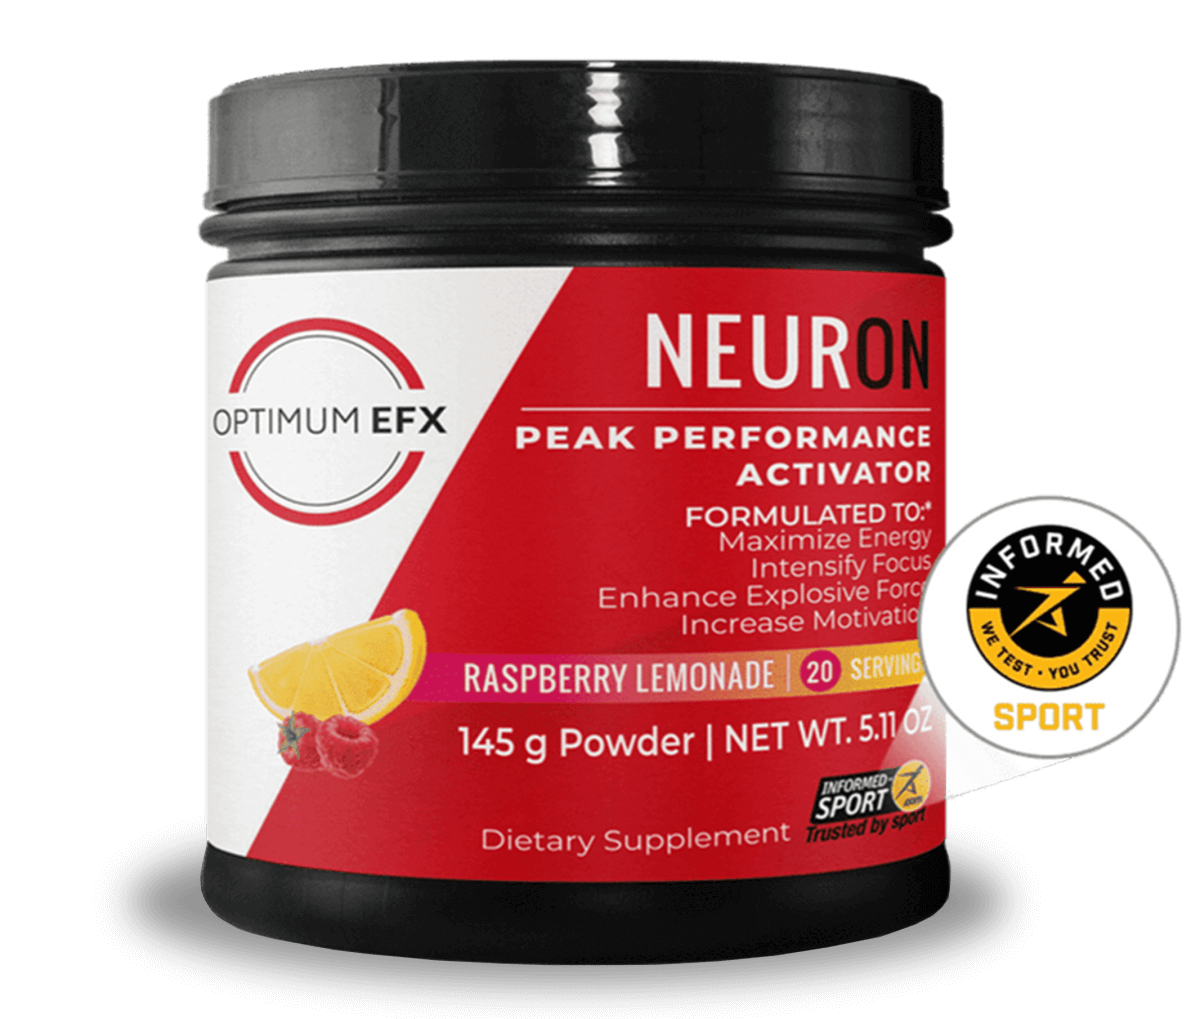 Neuron peak performance activator